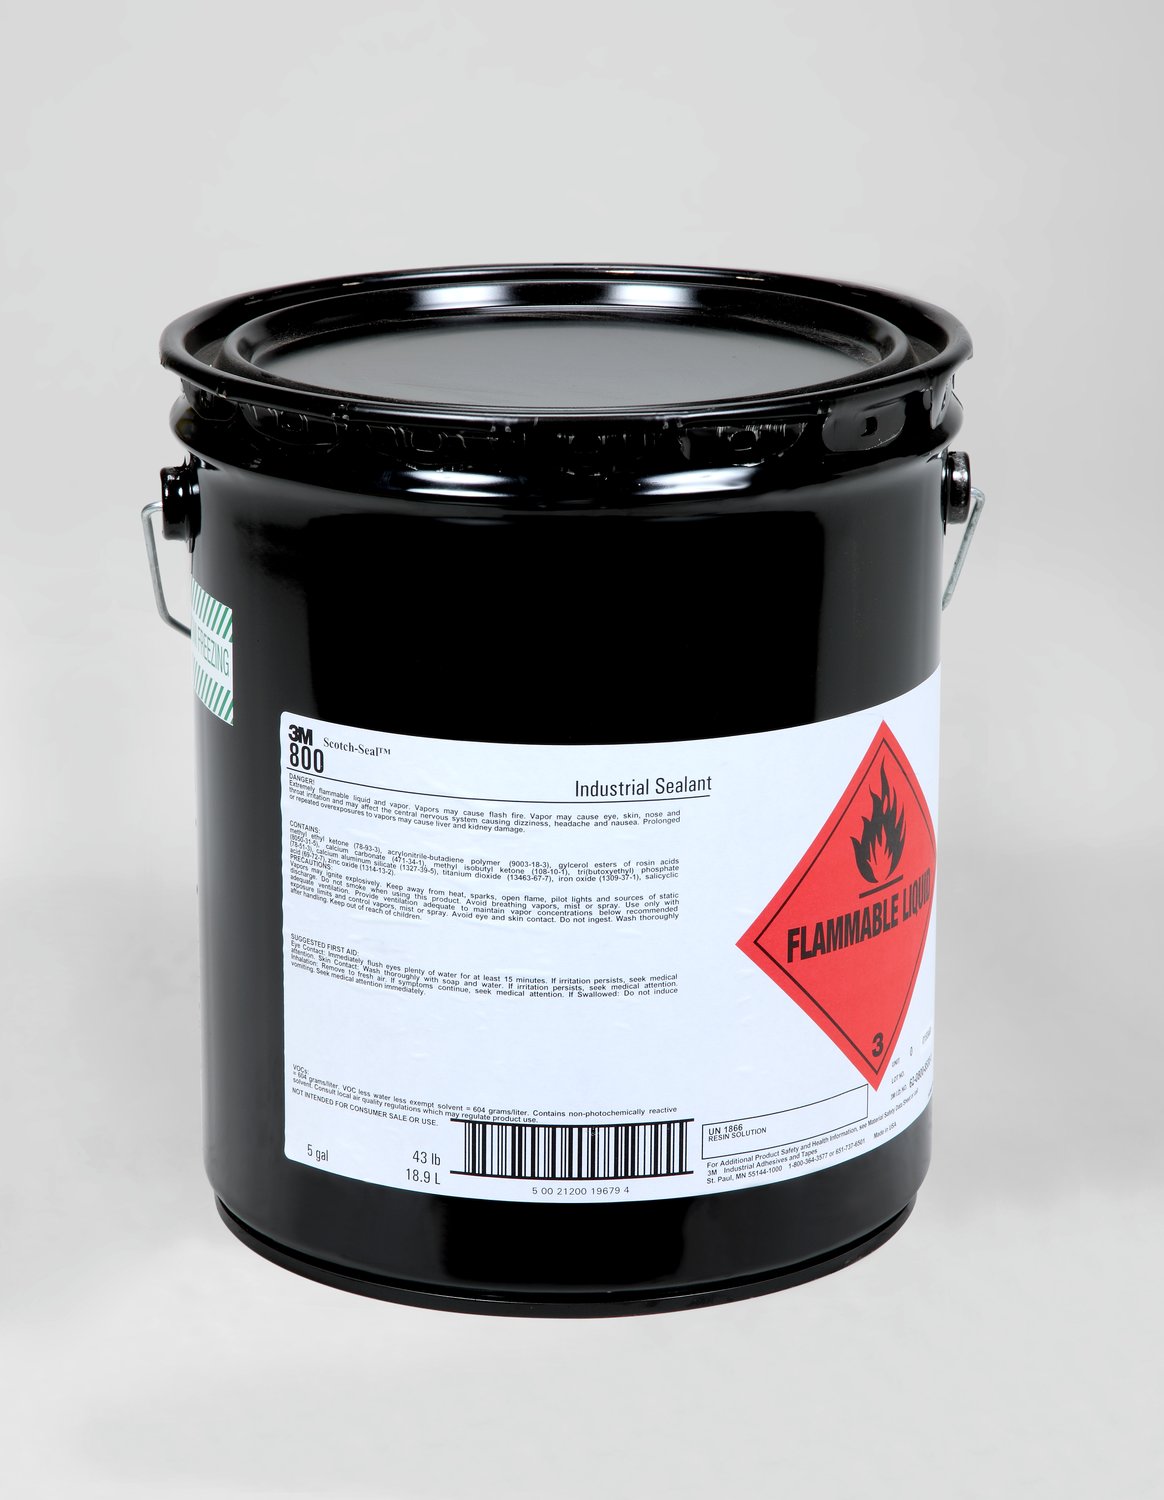 7100031672 - 3M Scotch-Seal Industrial Sealant 800, Reddish Brown, 5 Gallon Drum
(Pail)